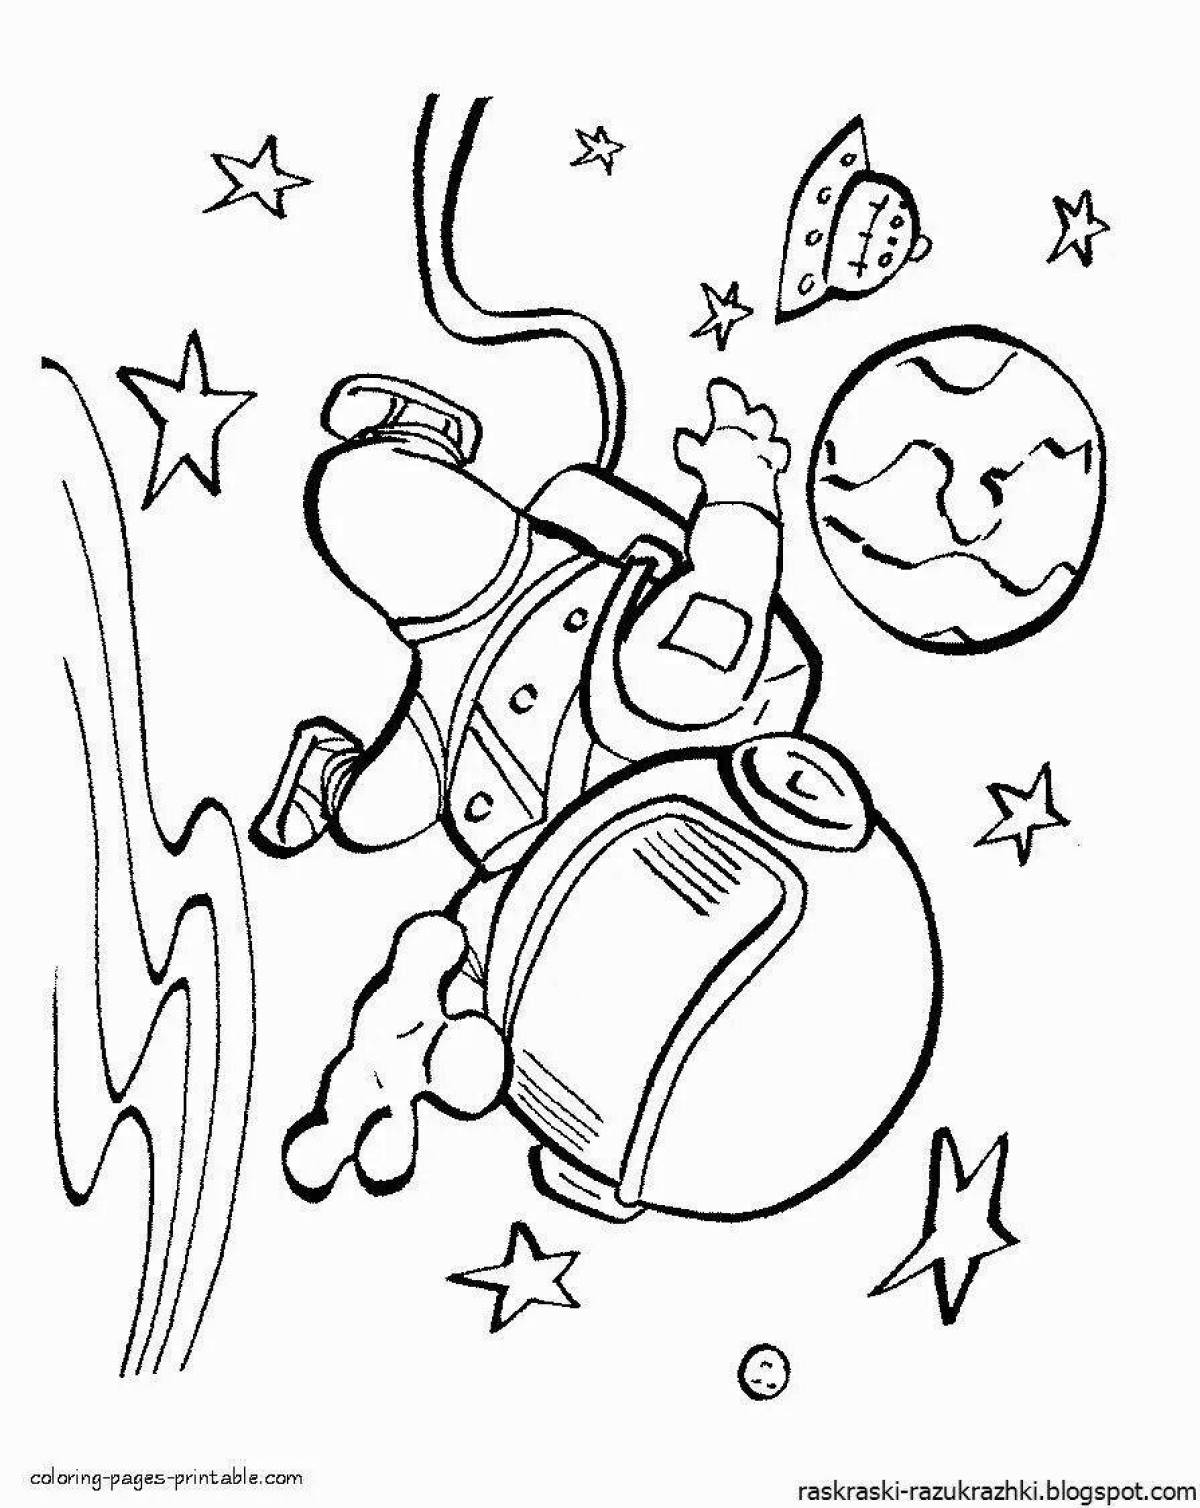 Intergalactic space coloring book